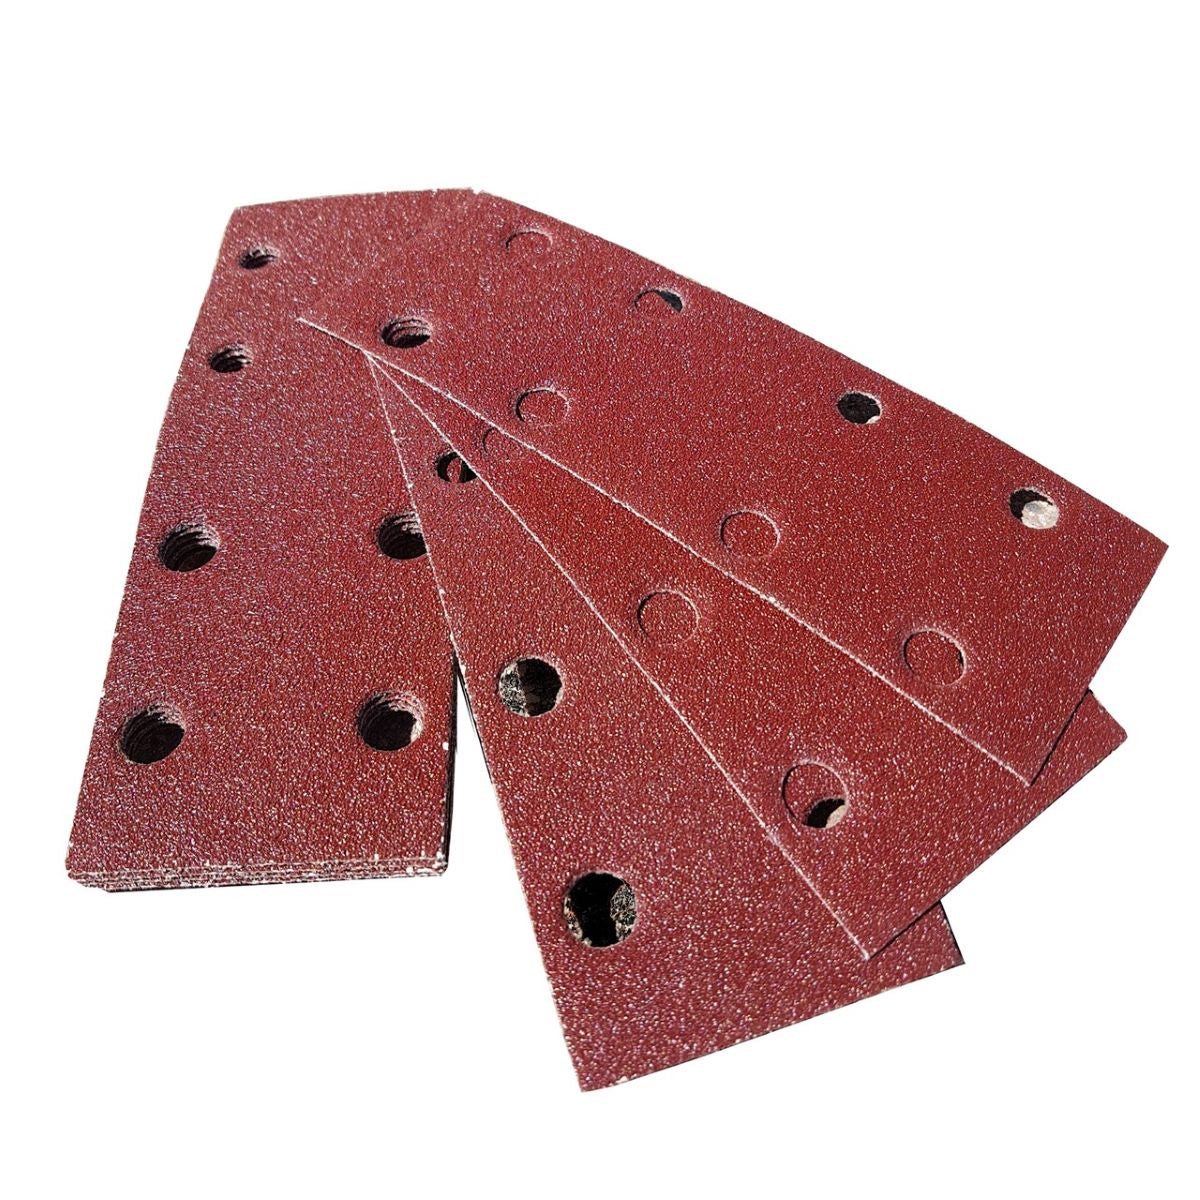 2 3/4" x 7" 8 Hole Medium Handsander Red Aluminum Oxide Resin Hook Paper - per 100